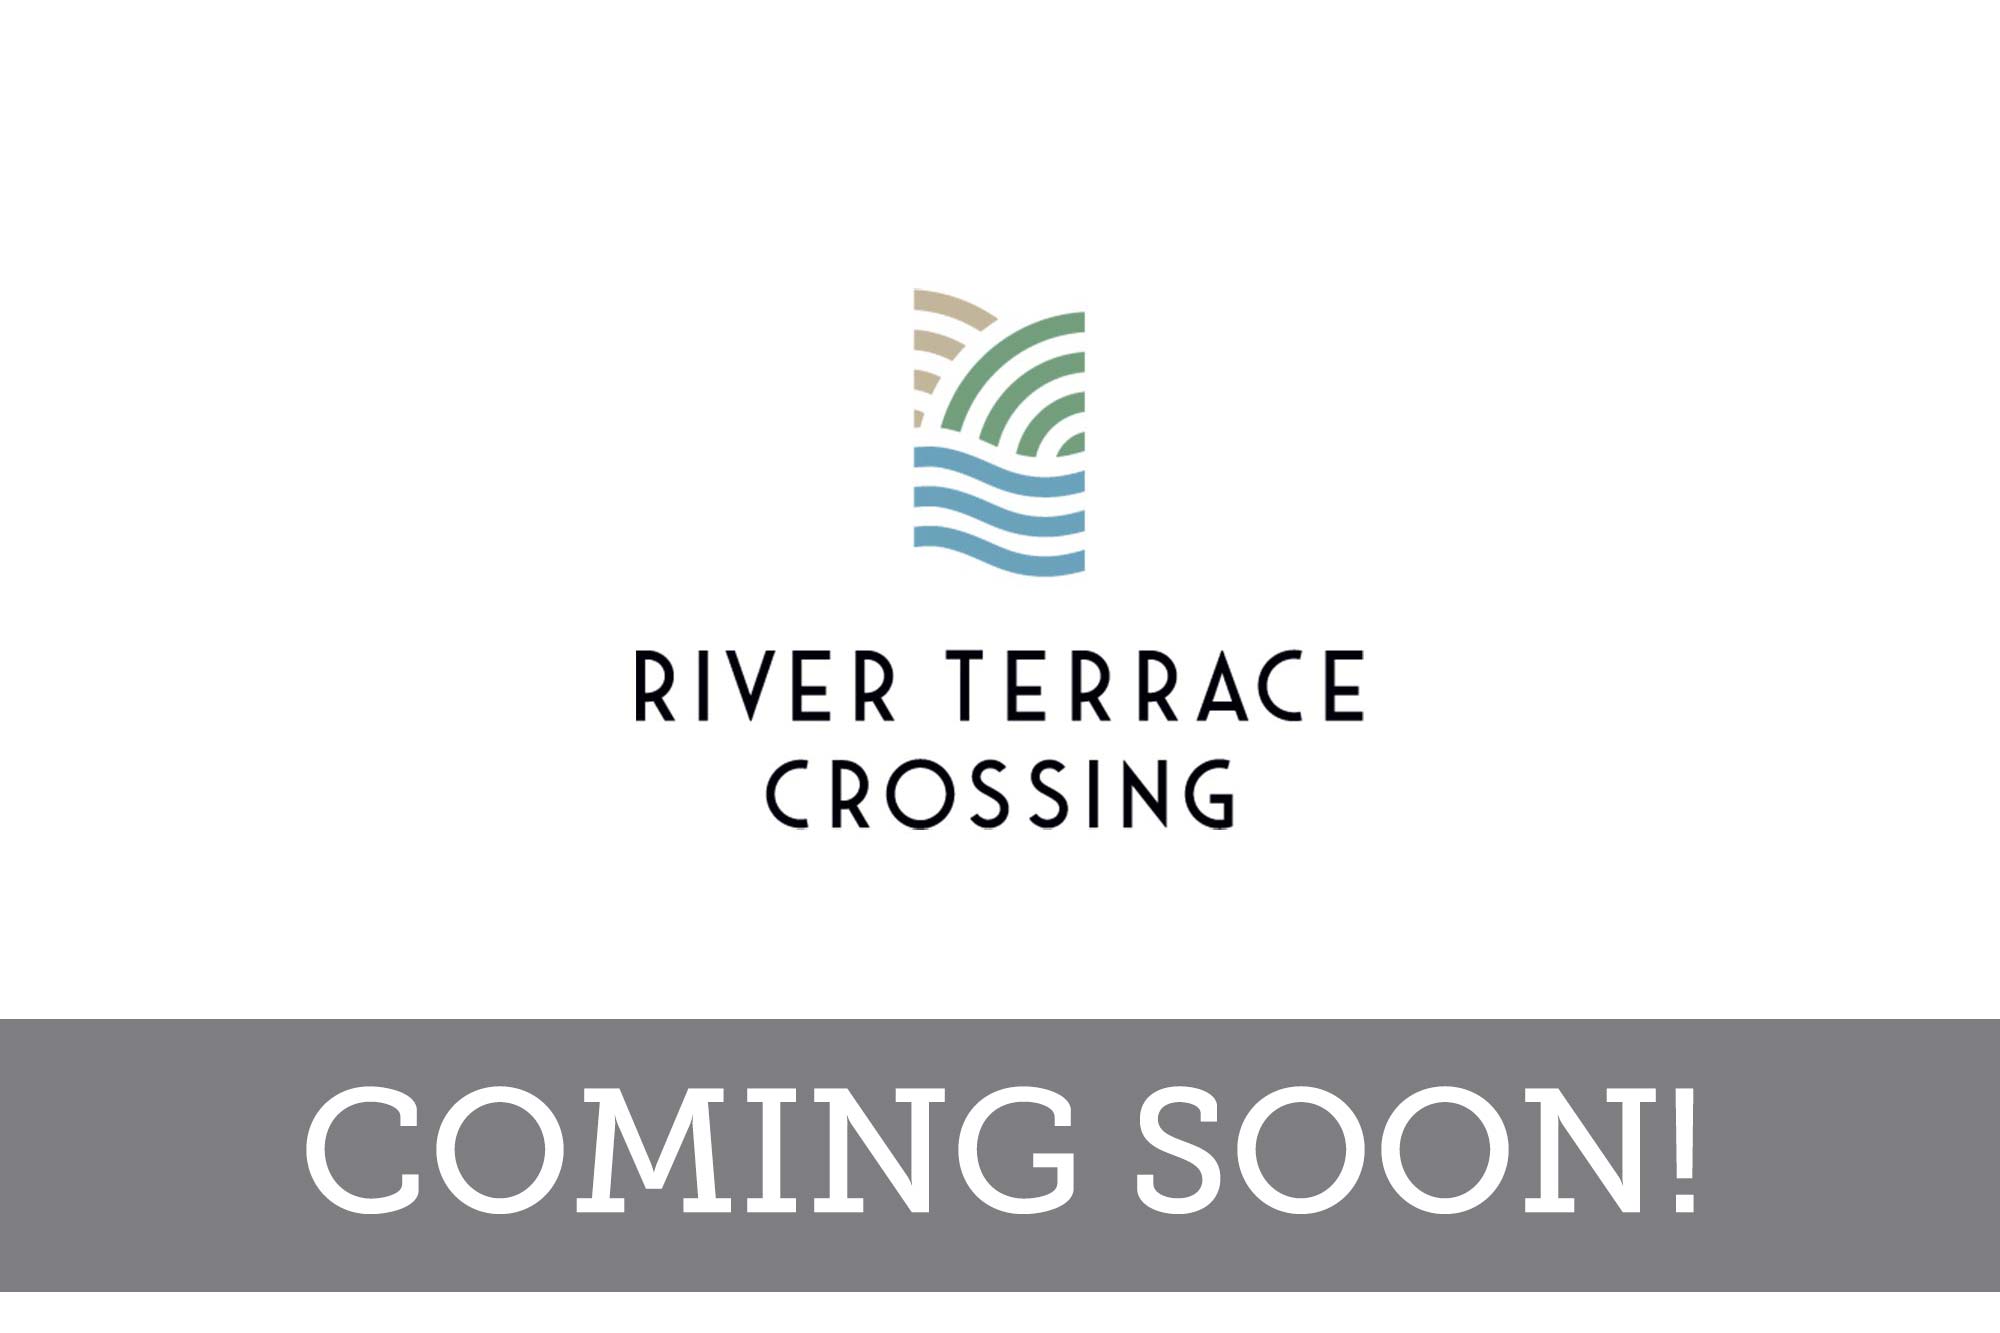 River Terrace Crossing - Coming Soon